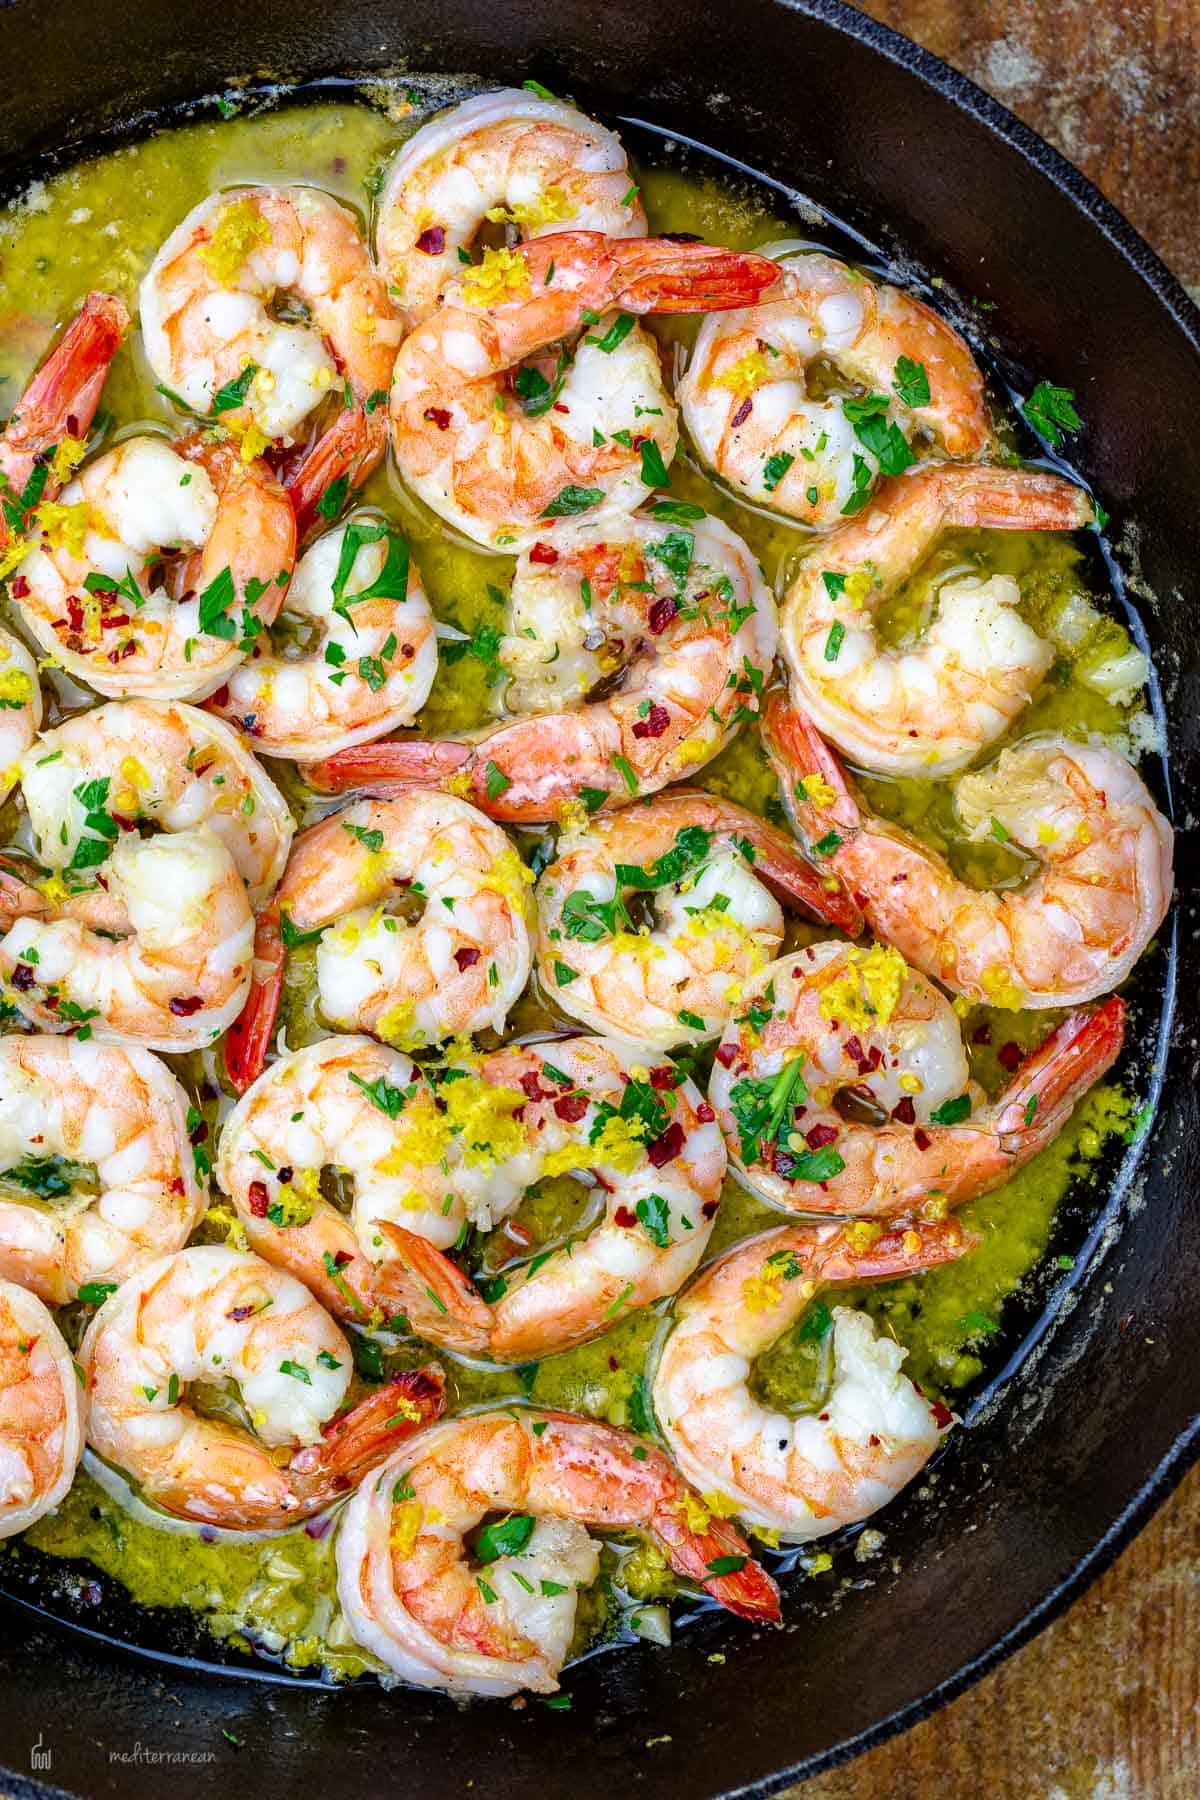 How to Make Shrimp Scampi (BEST recipe & tips!) l The Mediterranean Dish